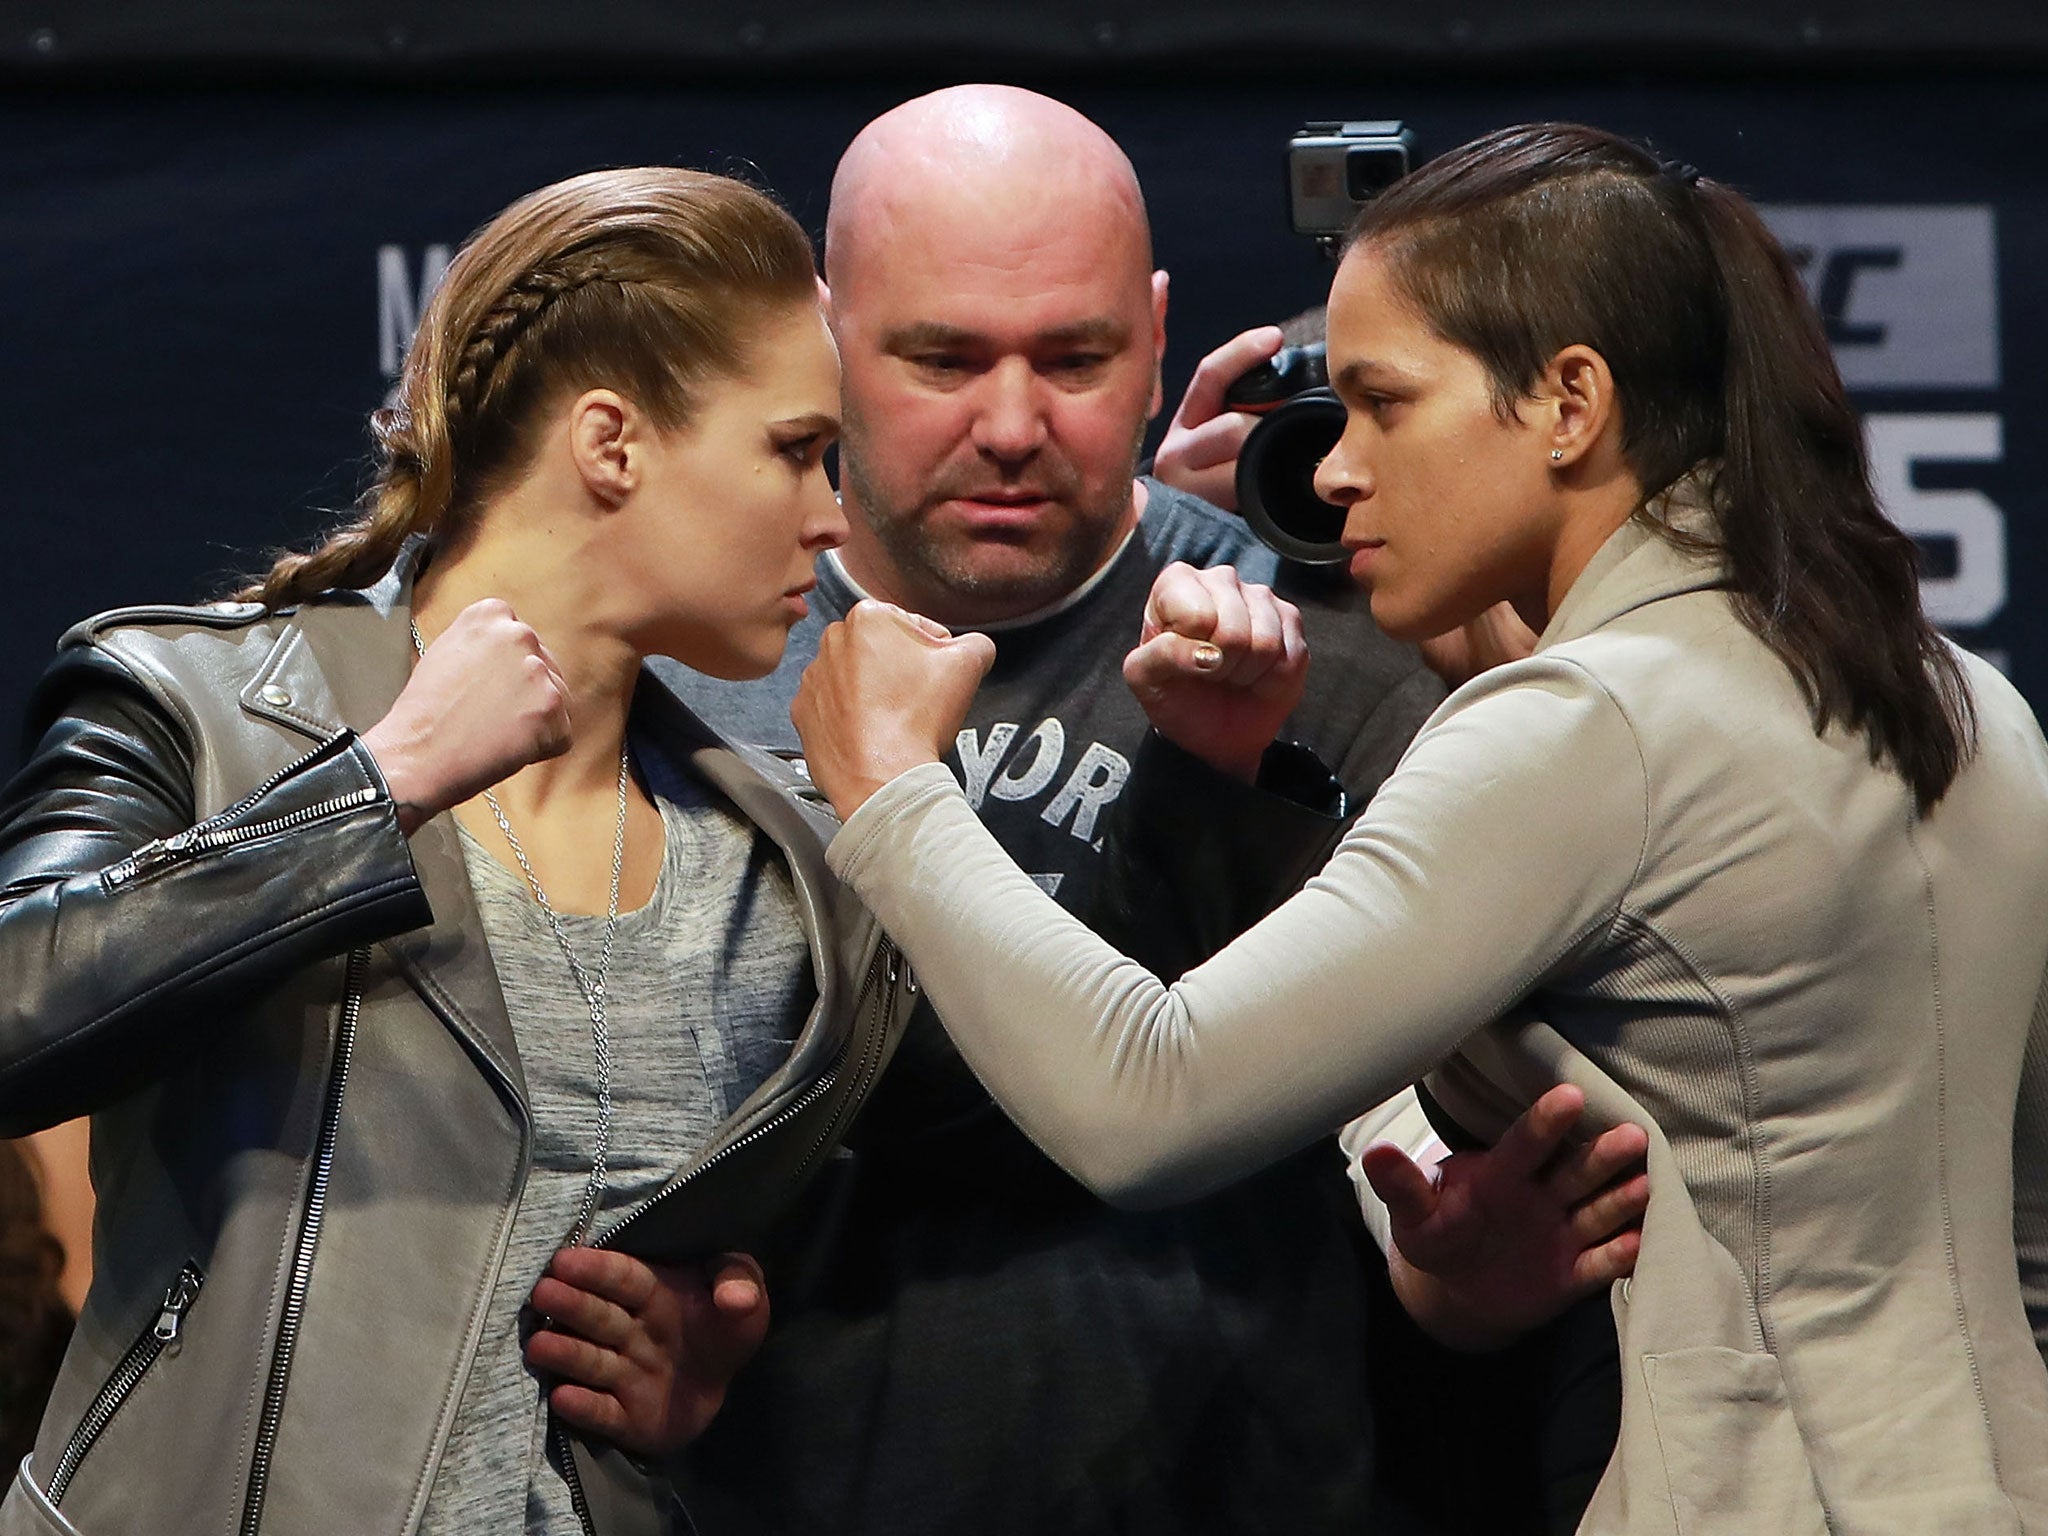 Ronda Rousey faces Amanda Nunes at UFC 207